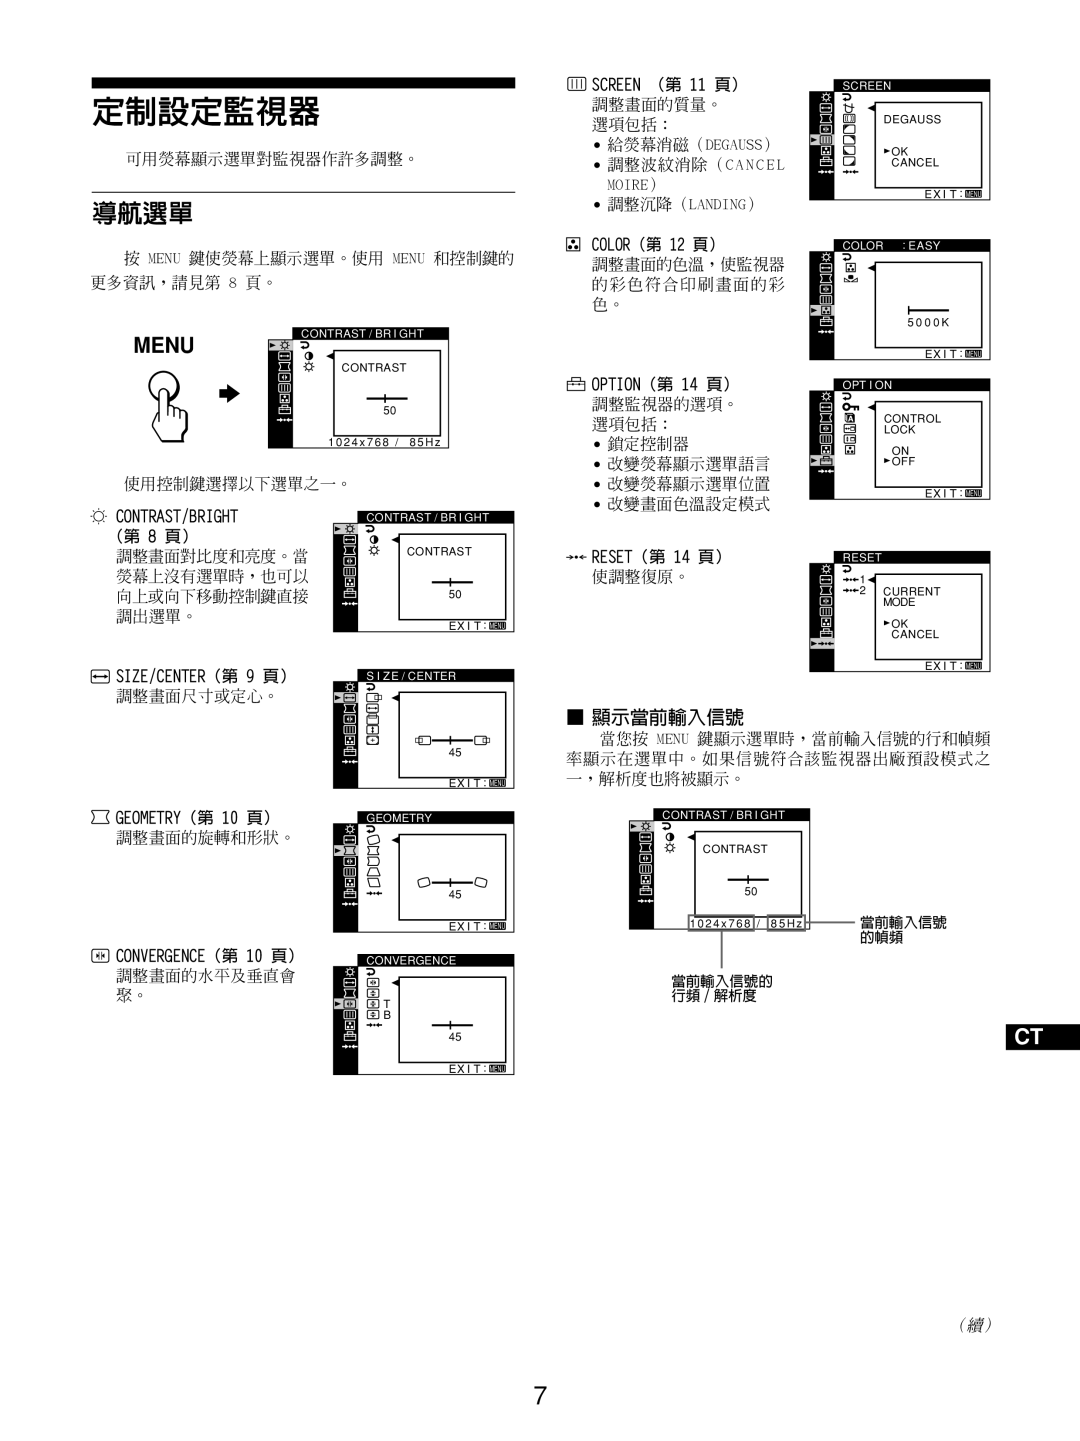 Sony GDM-5510 定制設定監視器, 導航選單, Menu, 顯示當前輸入信號, SCREEN （第 11 頁）, COLOR（第 12 頁）, Contrast/Bright, （第 8 頁）, SIZE/CENTER（第 9 頁） 